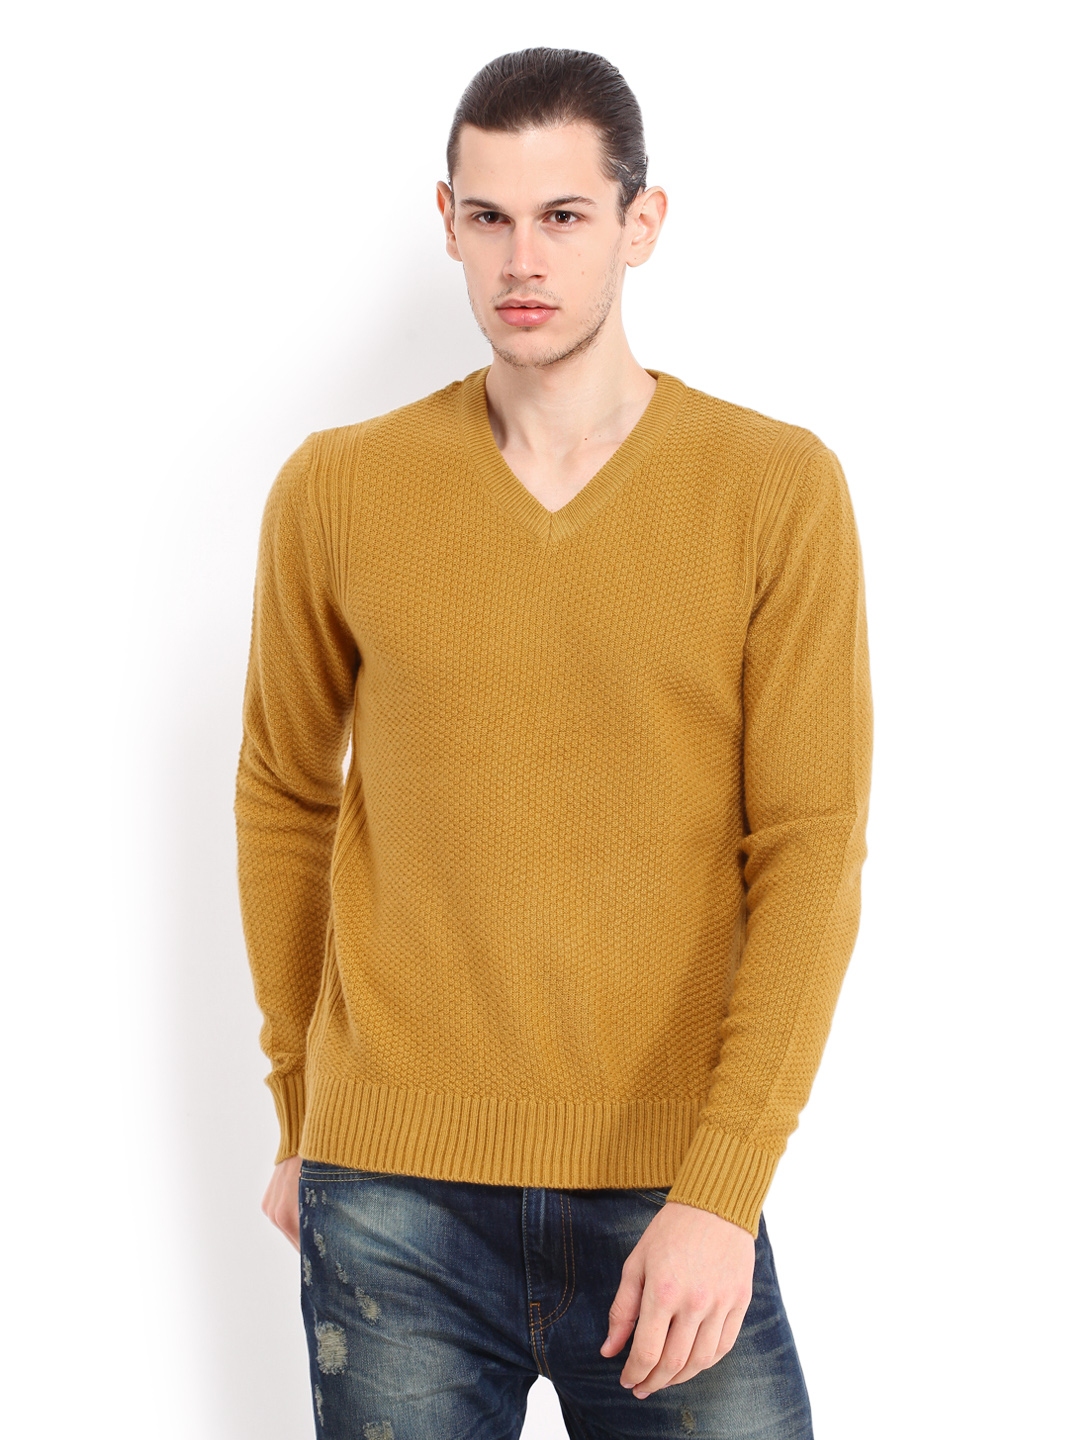 Mustard yellow long cardigan sweater men boutique